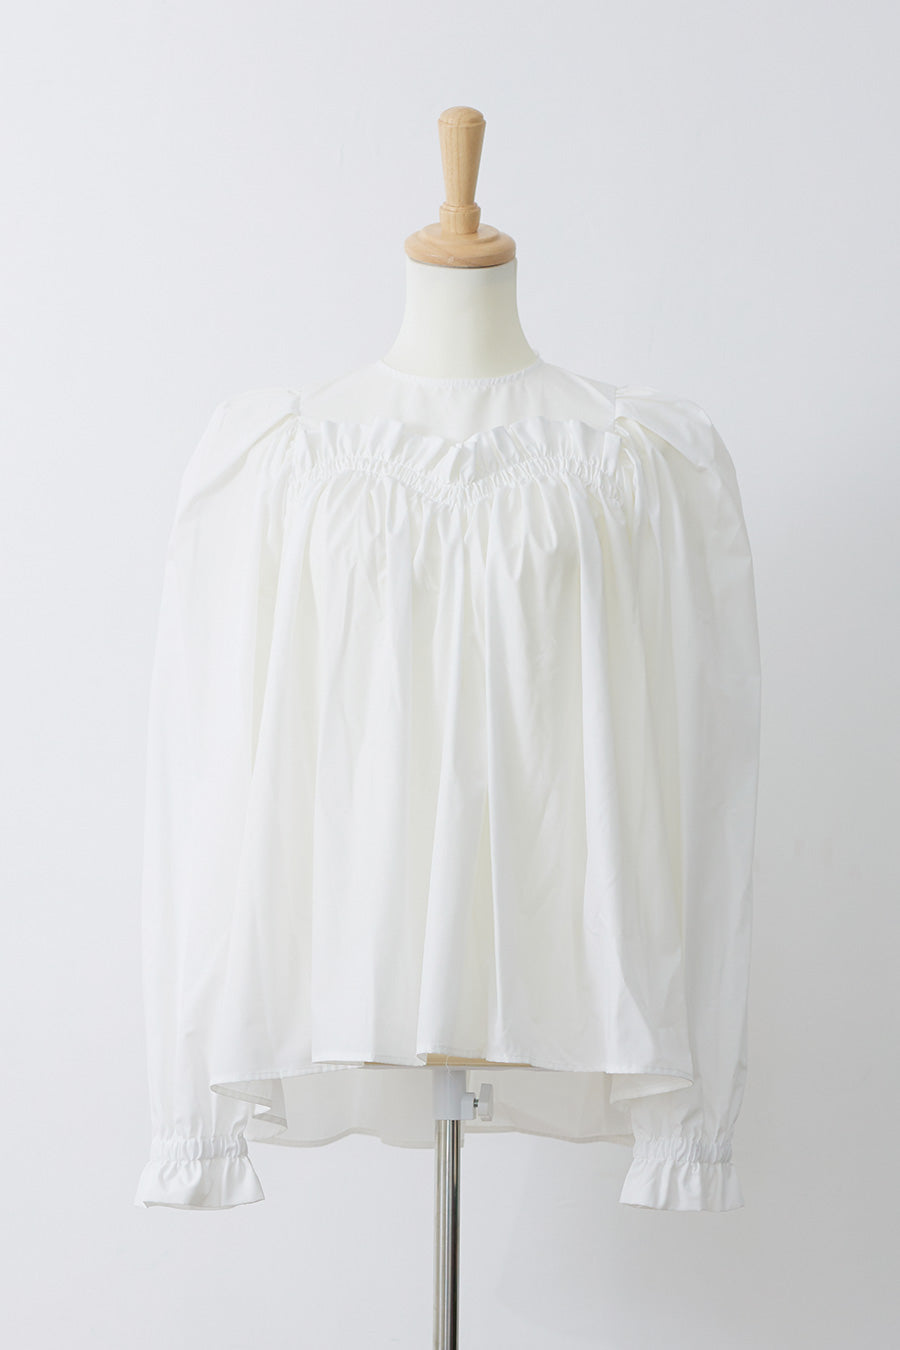 × Kana Nakamura Cupid shirring blouse / Stone gray